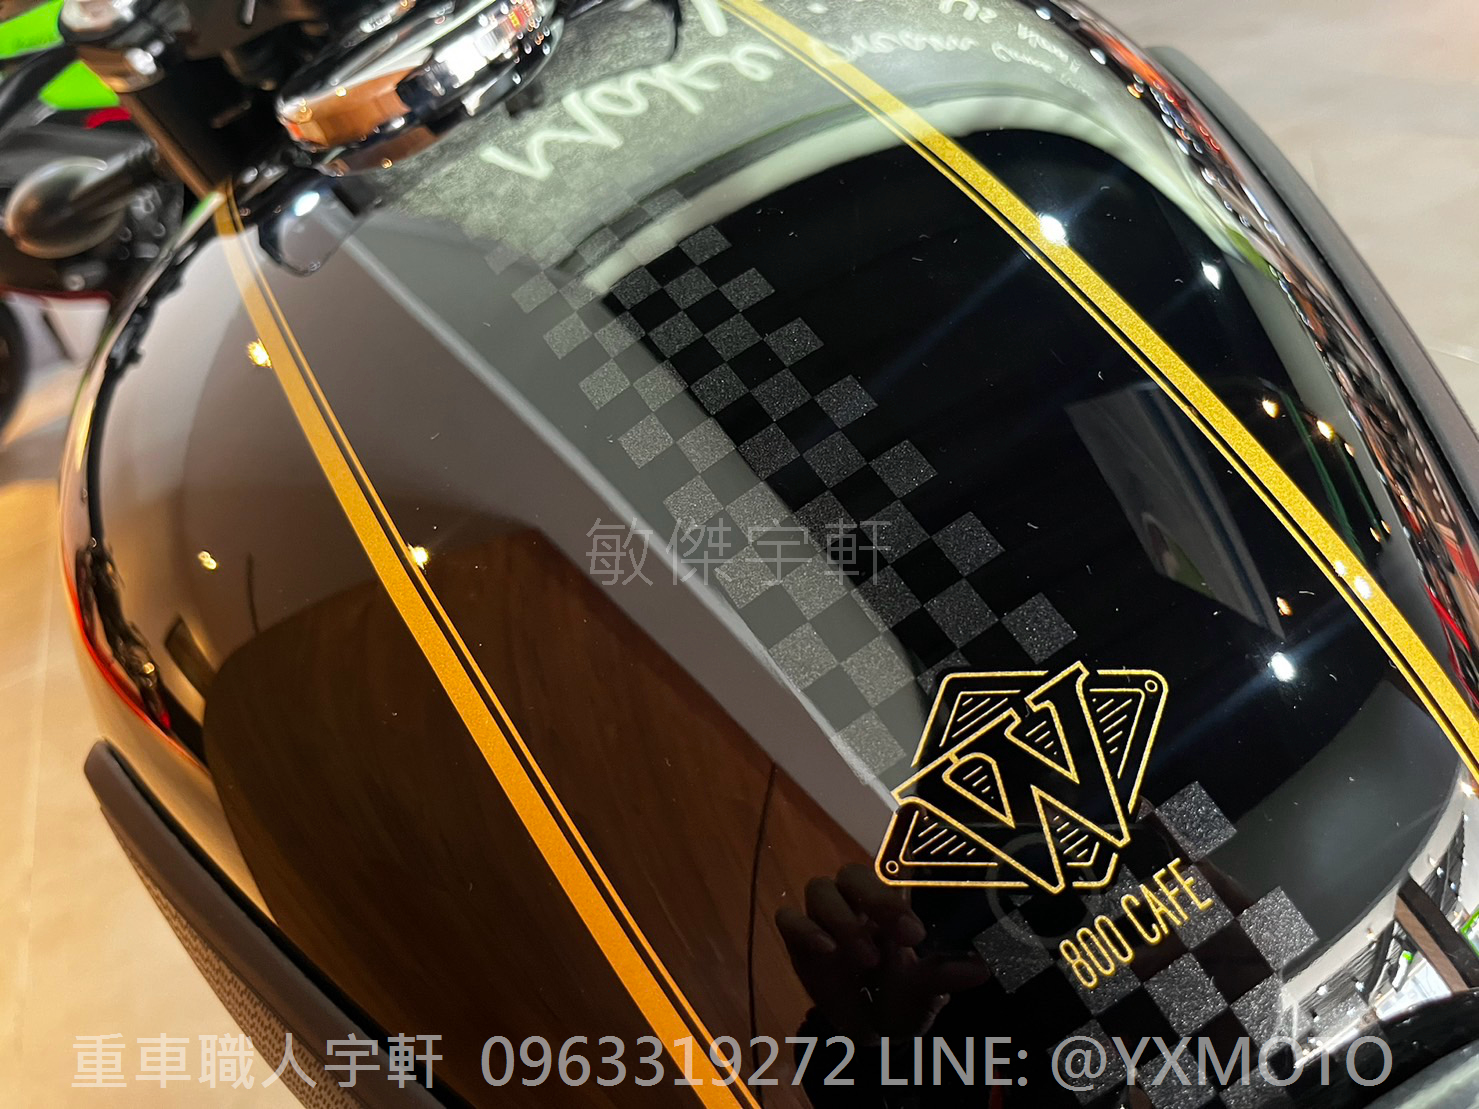 KAWASAKI W800 CAFE新車出售中 【敏傑宇軒】2023 Kawasaki W800 Cafe 咖啡賽車 總代理公司車 保固三年不限里程 | 重車銷售職人-宇軒 (敏傑)